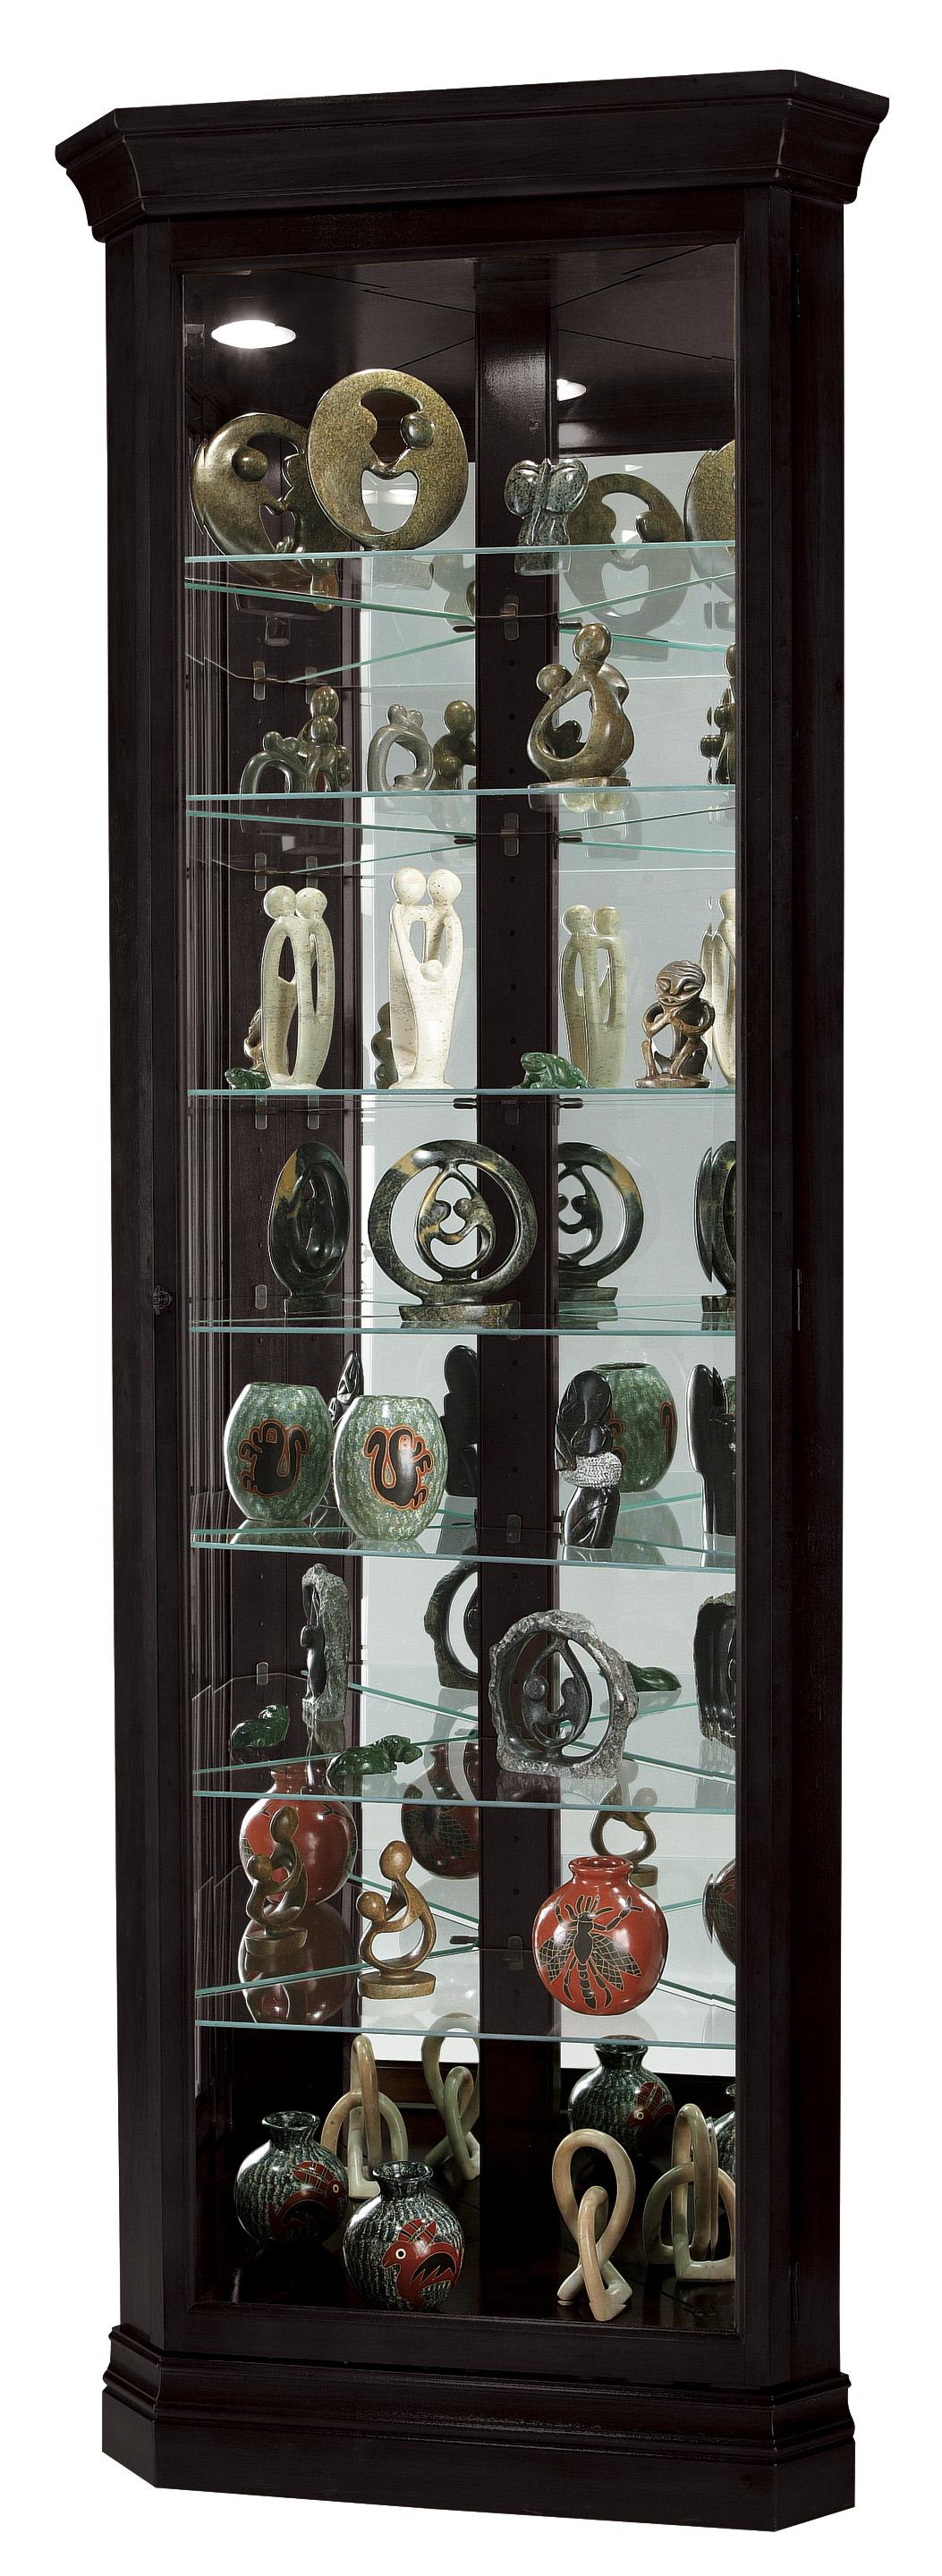 Duane Display Cabinet